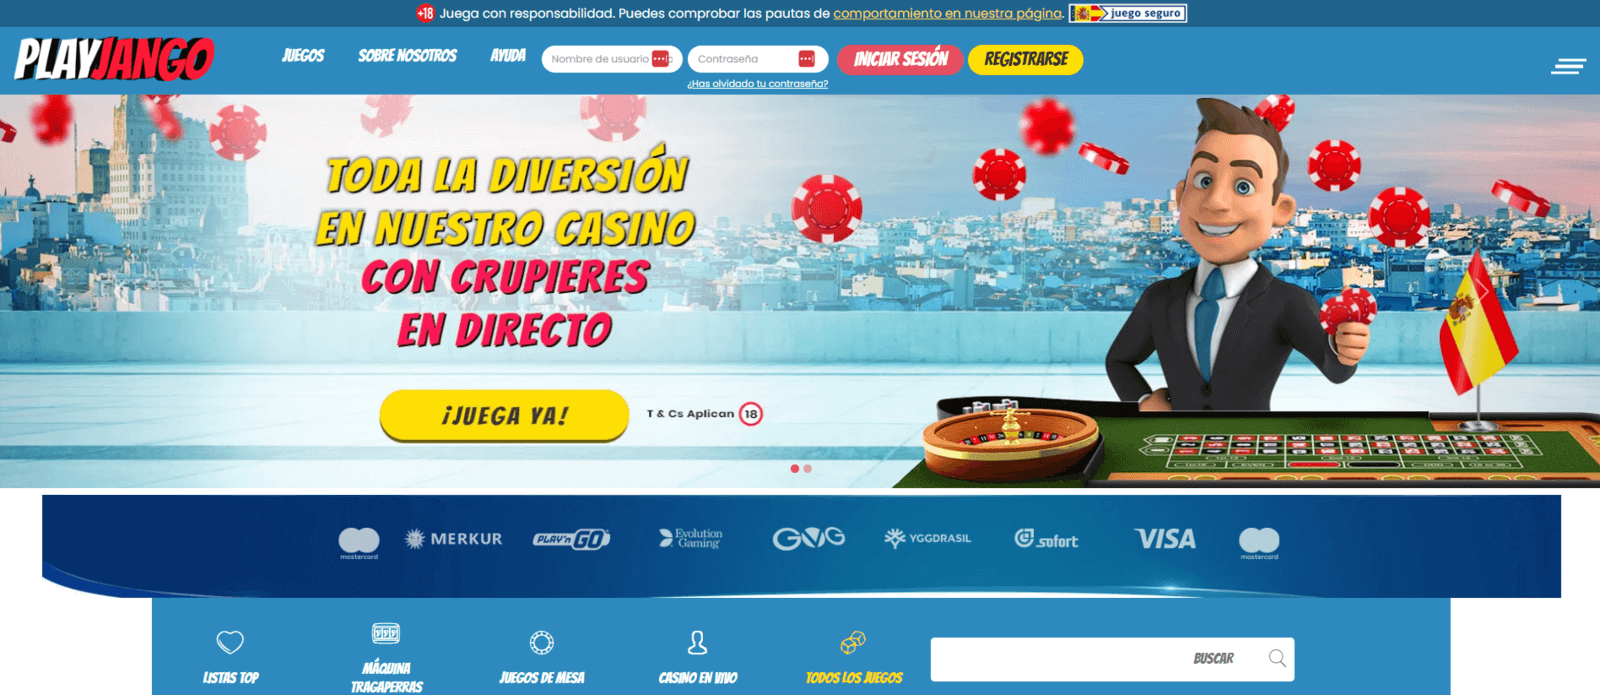 PlayJango nuevo casino online de España